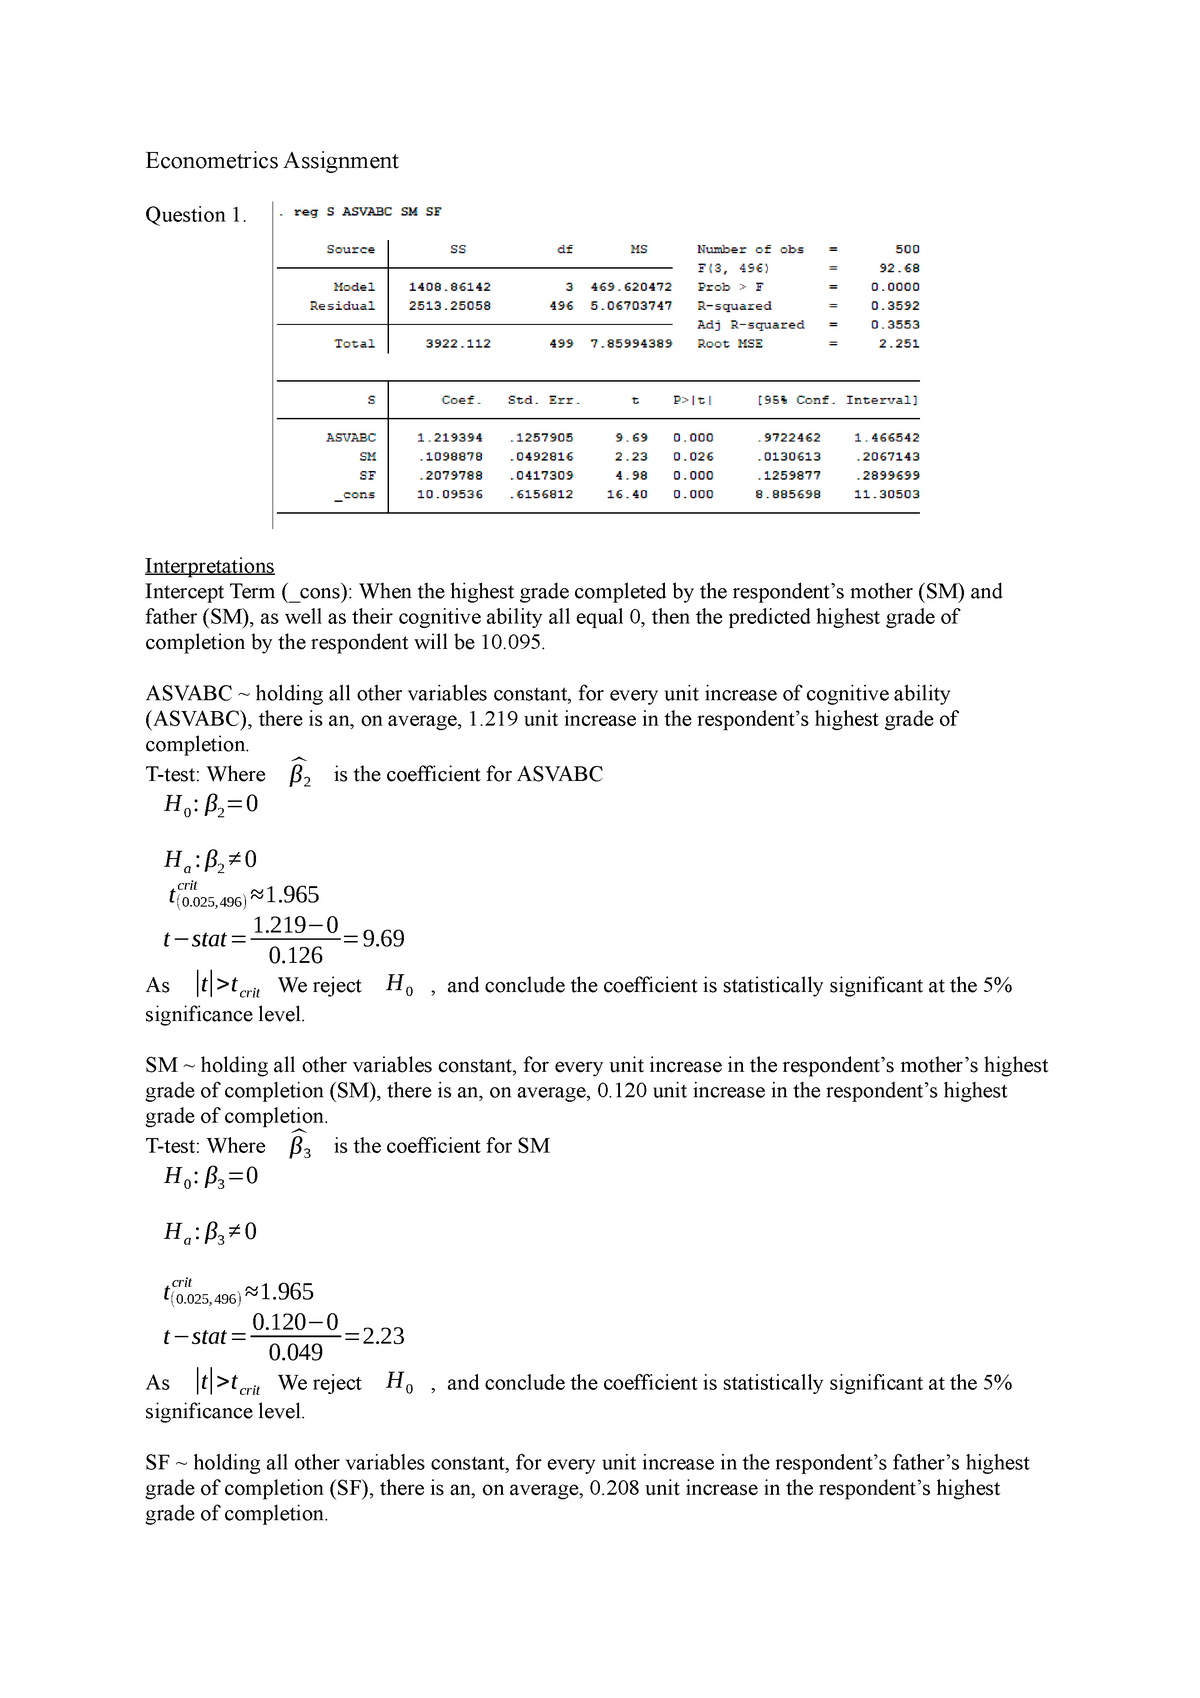 econometrics assignment sample